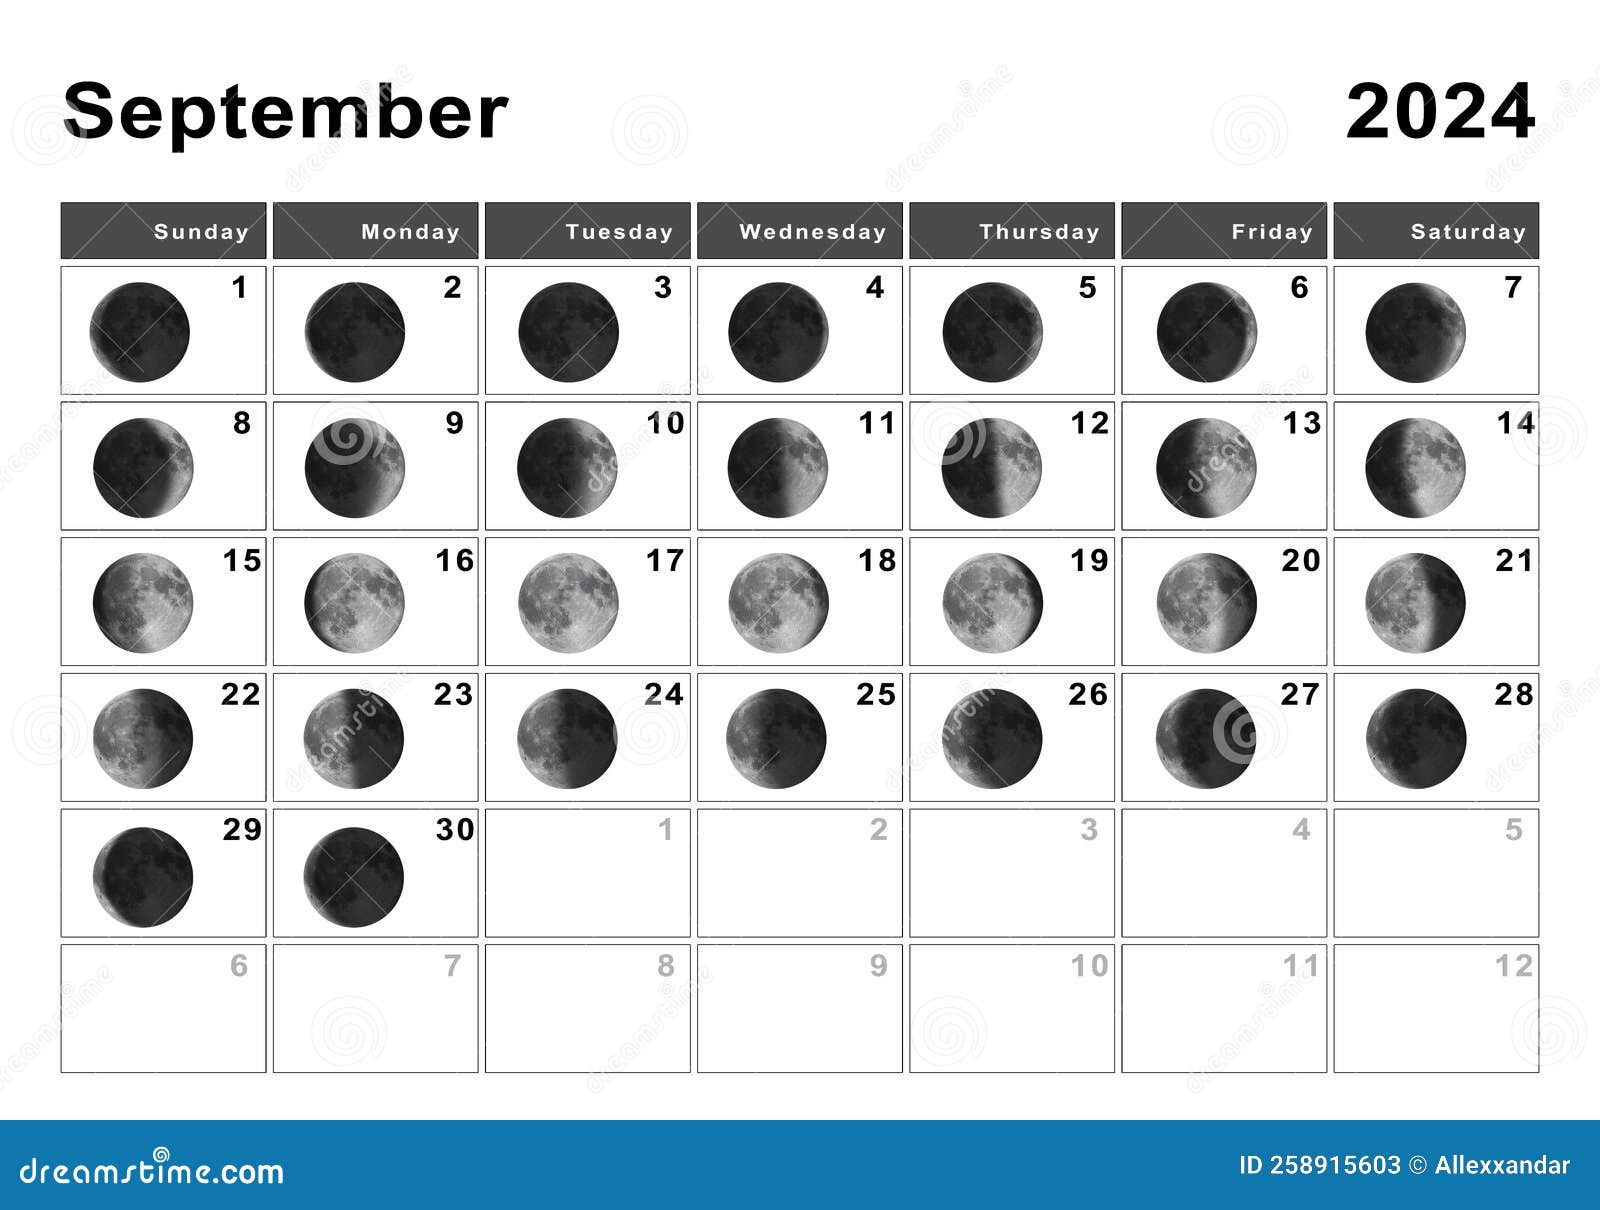 September 2024 Lunar Calendar, Moon Cycles Stock Illustration